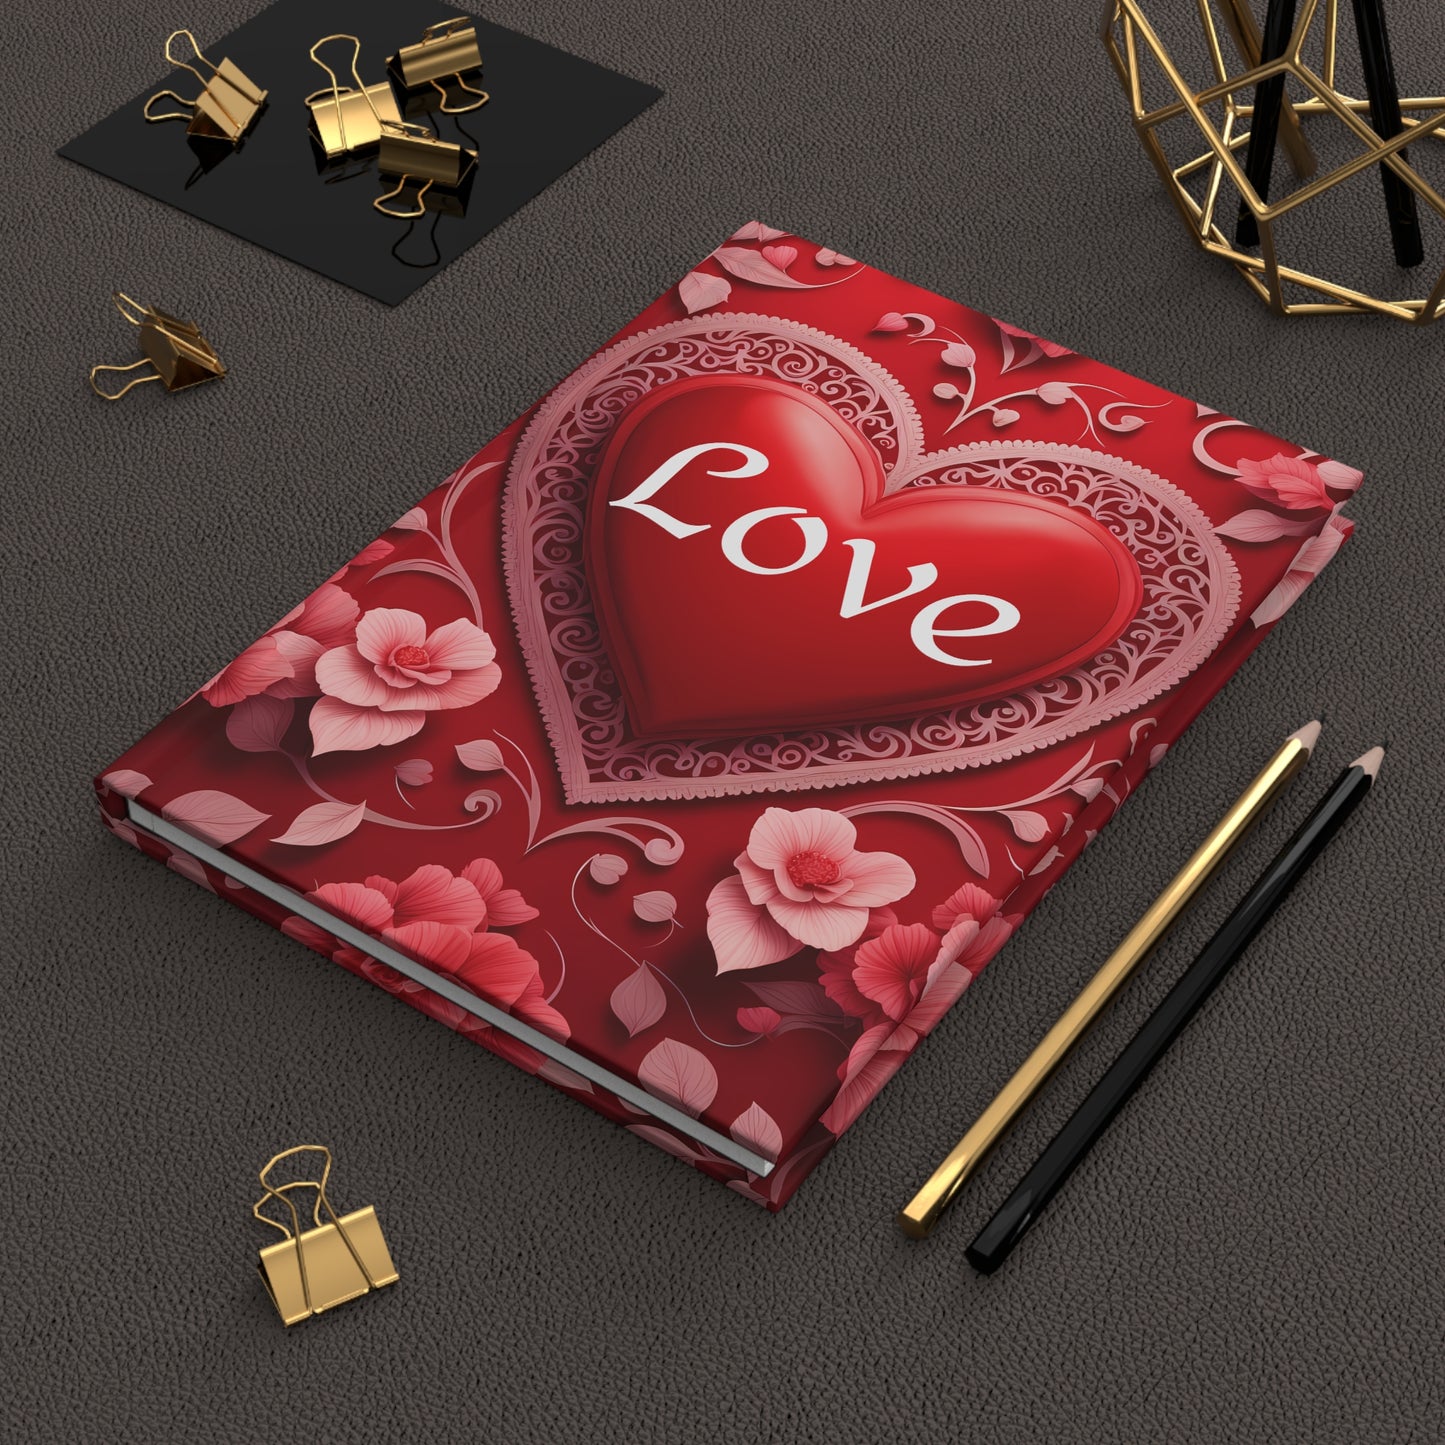 Love Hearts Hardcover Journal Matte